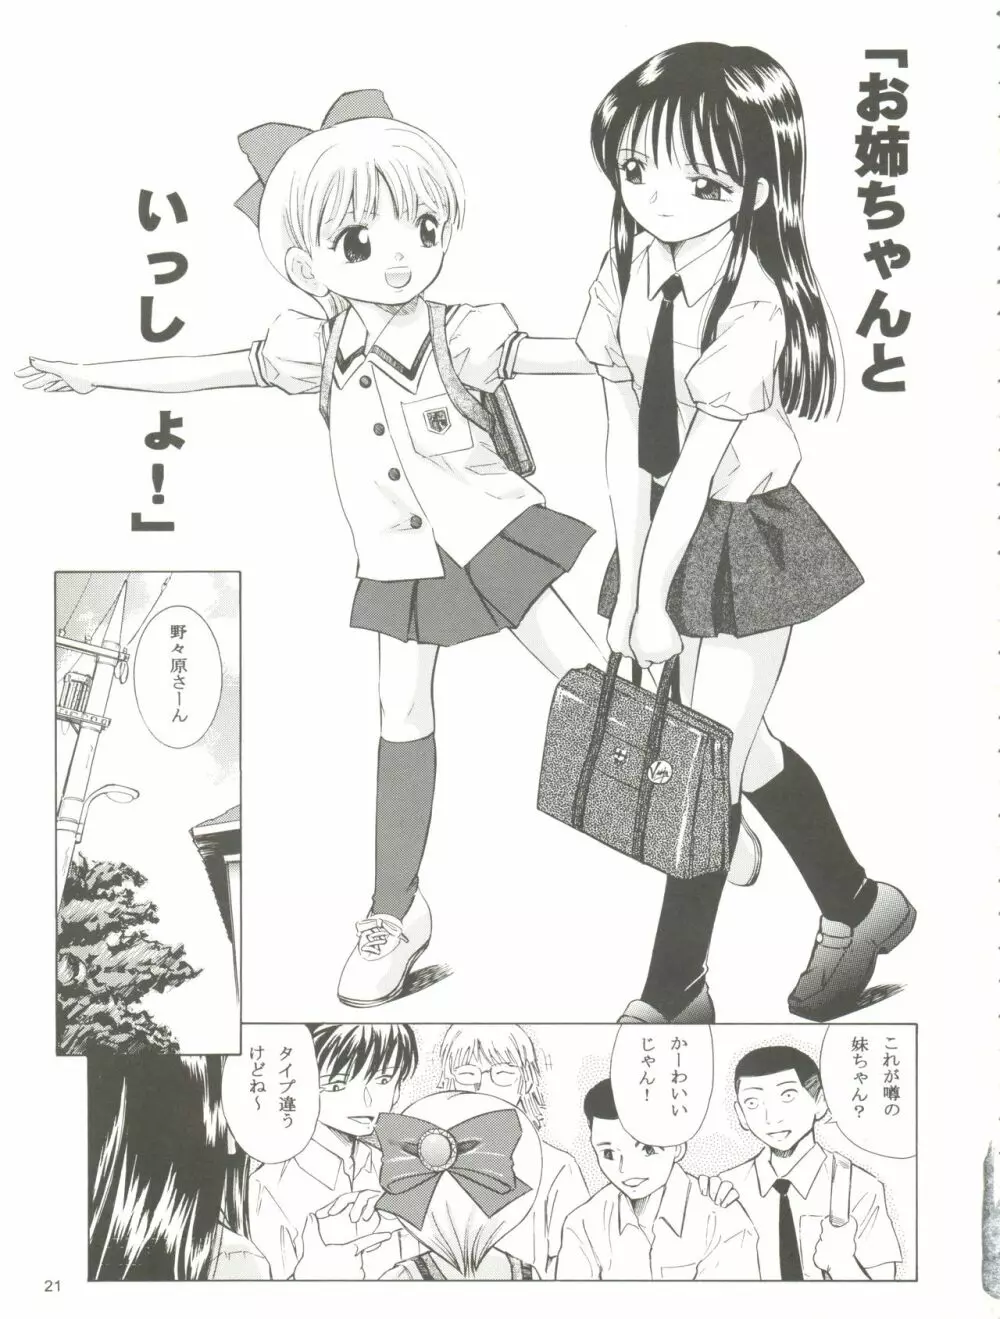 魔法旧式 17 魔女っ子丼! - page21